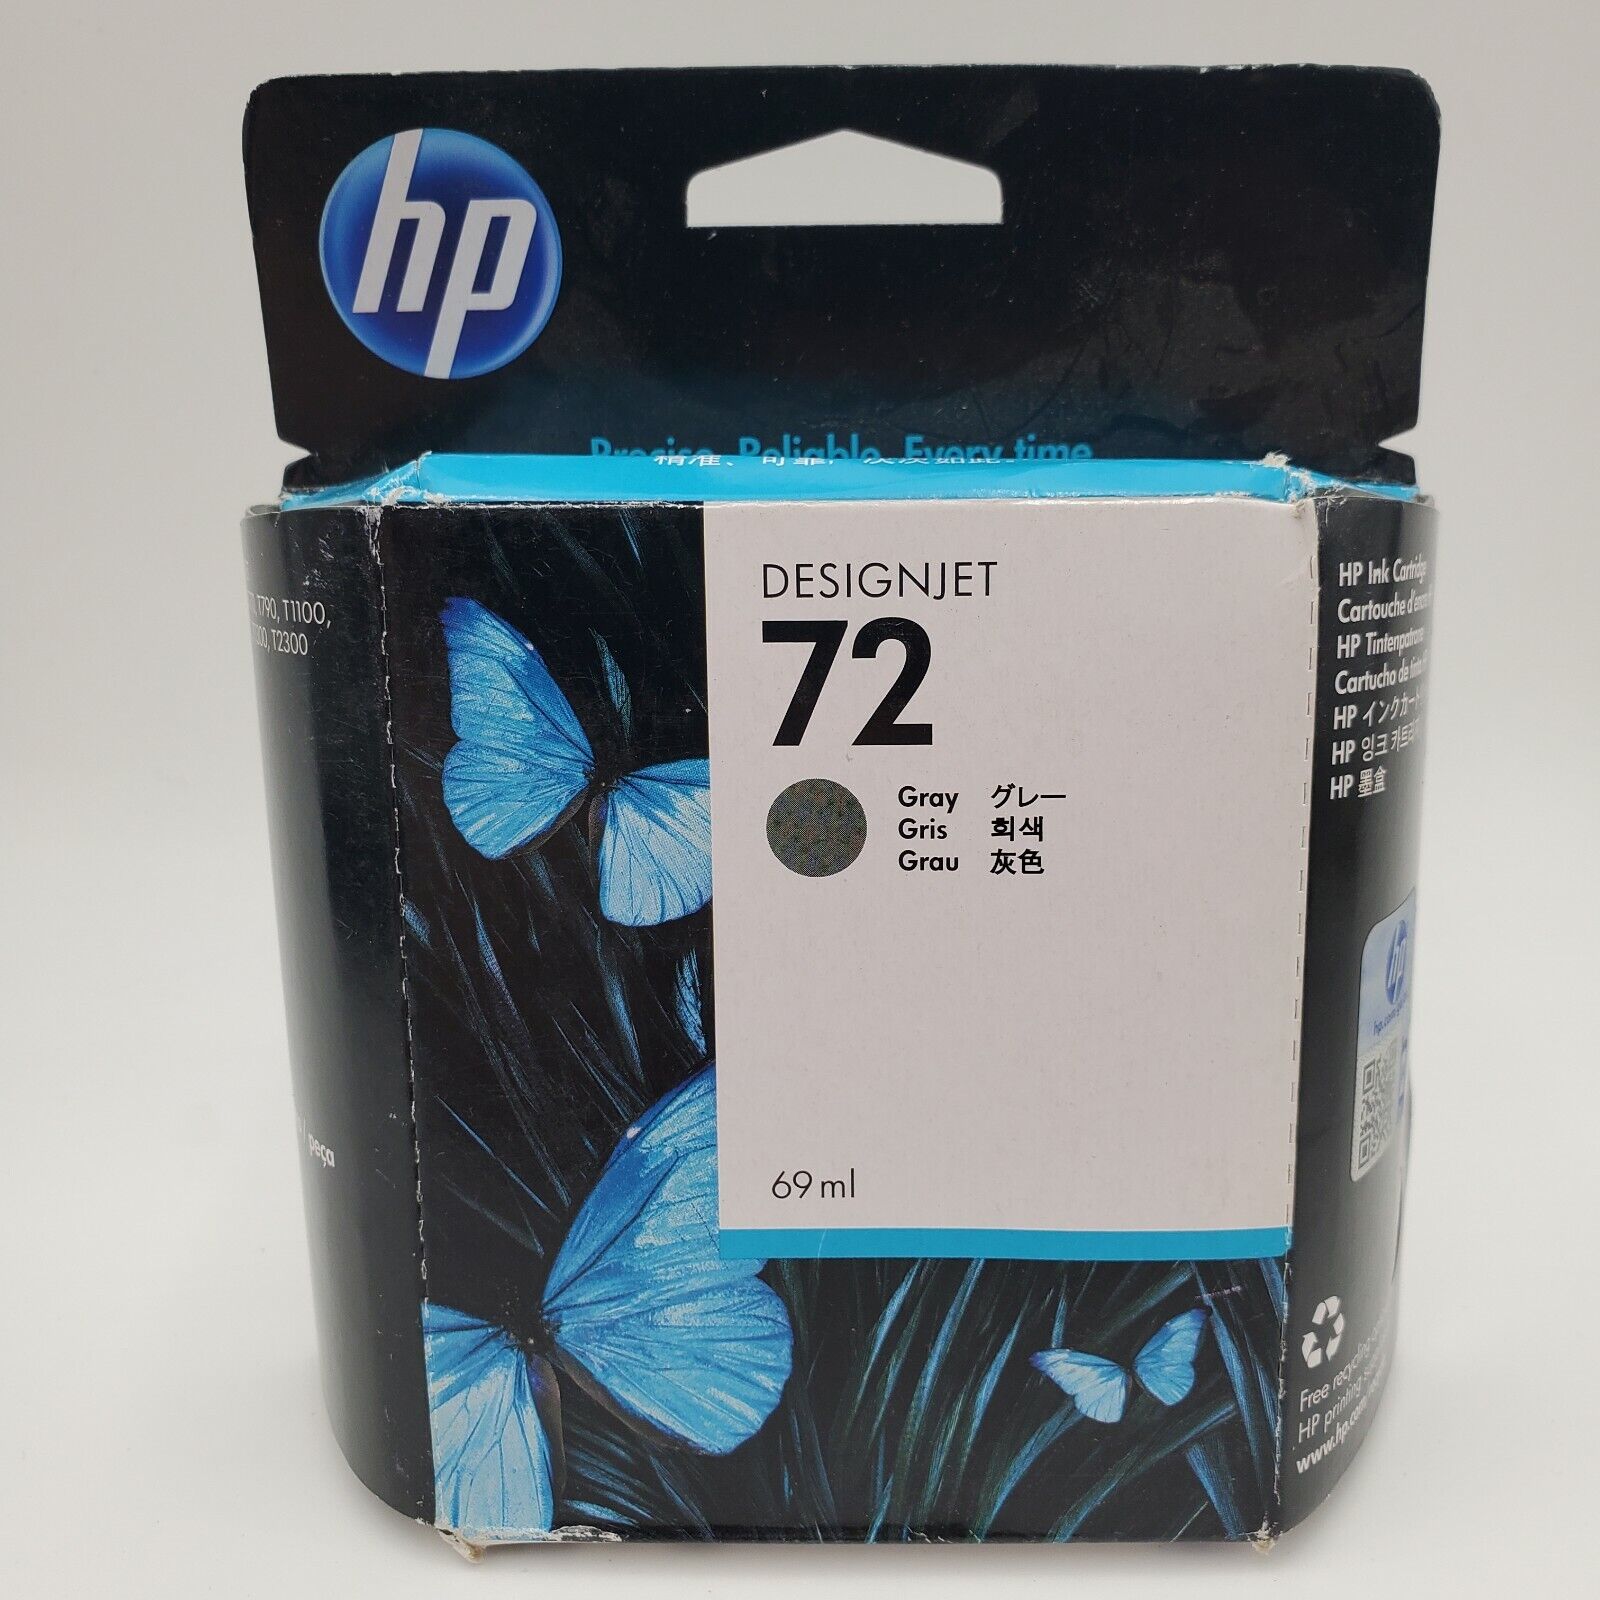 New Genuine OEM HP Designjet 72 C9401A 69ml Gray Ink Cartridge S